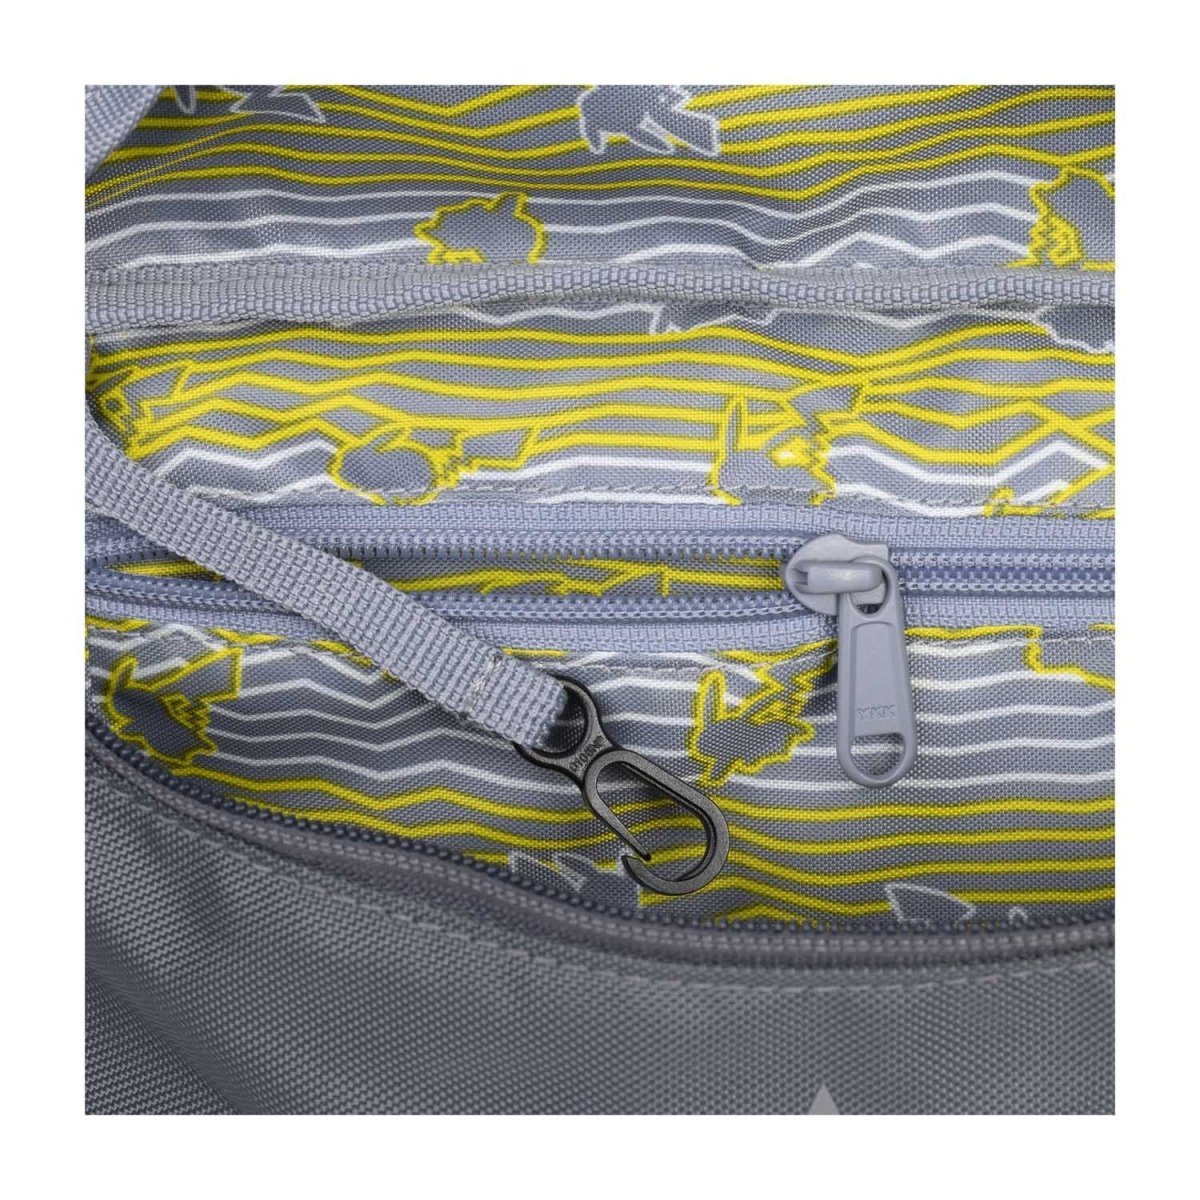 Pokémon Everyday Bags: Gray & Yellow Waist Bag